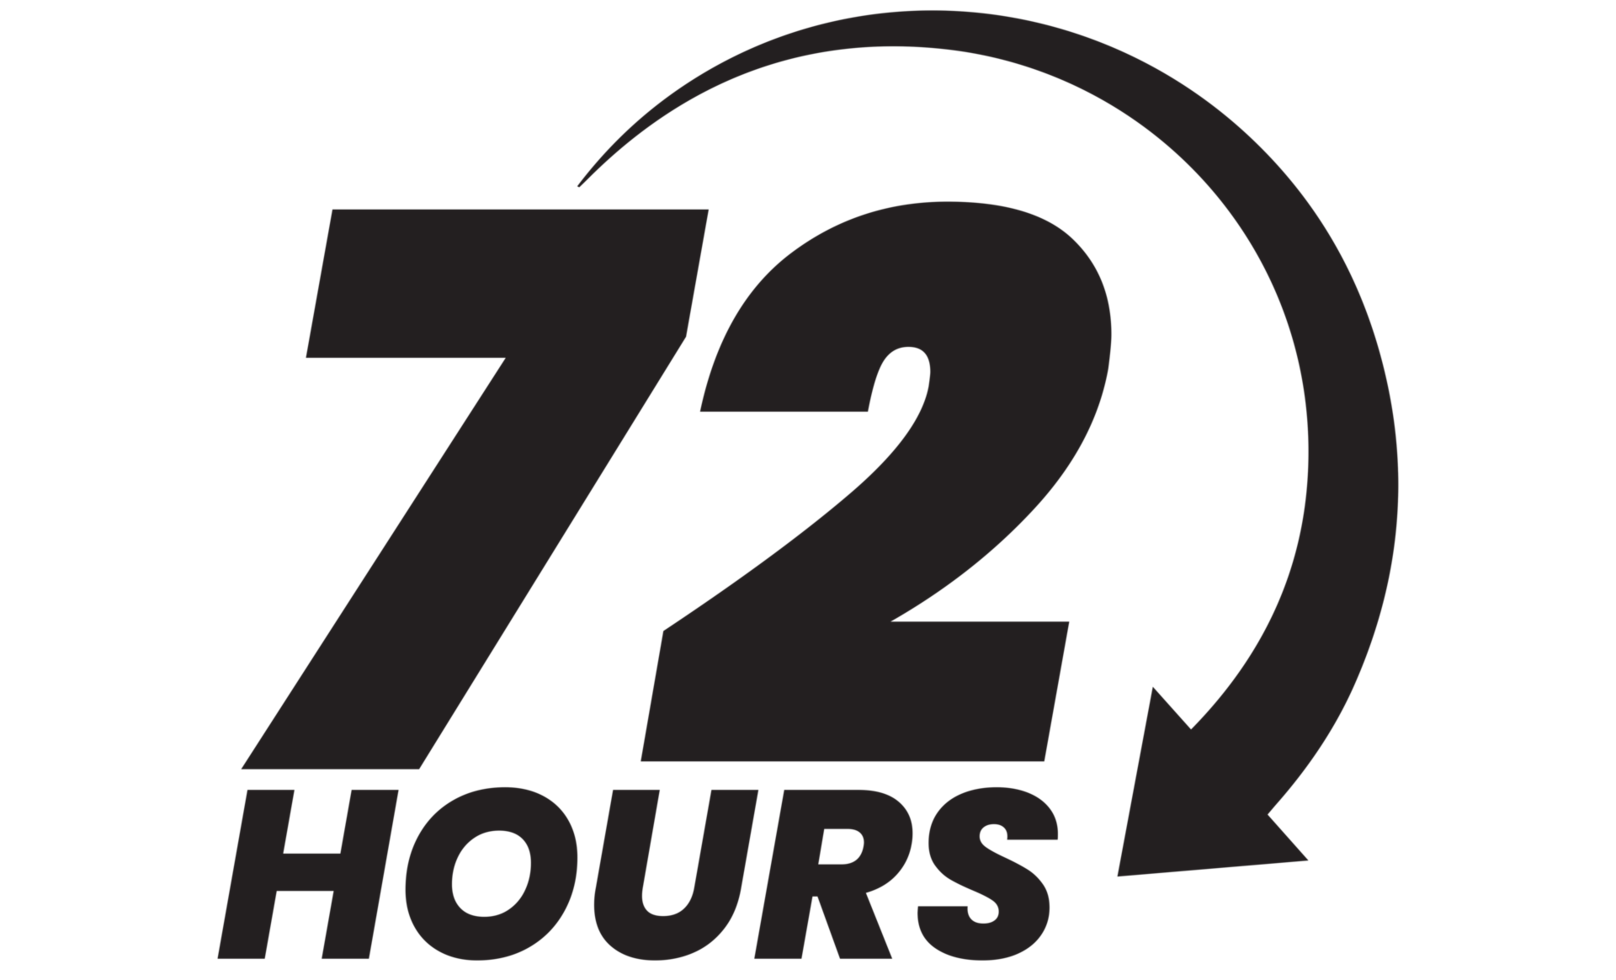 72 Hours logo on transparent background png